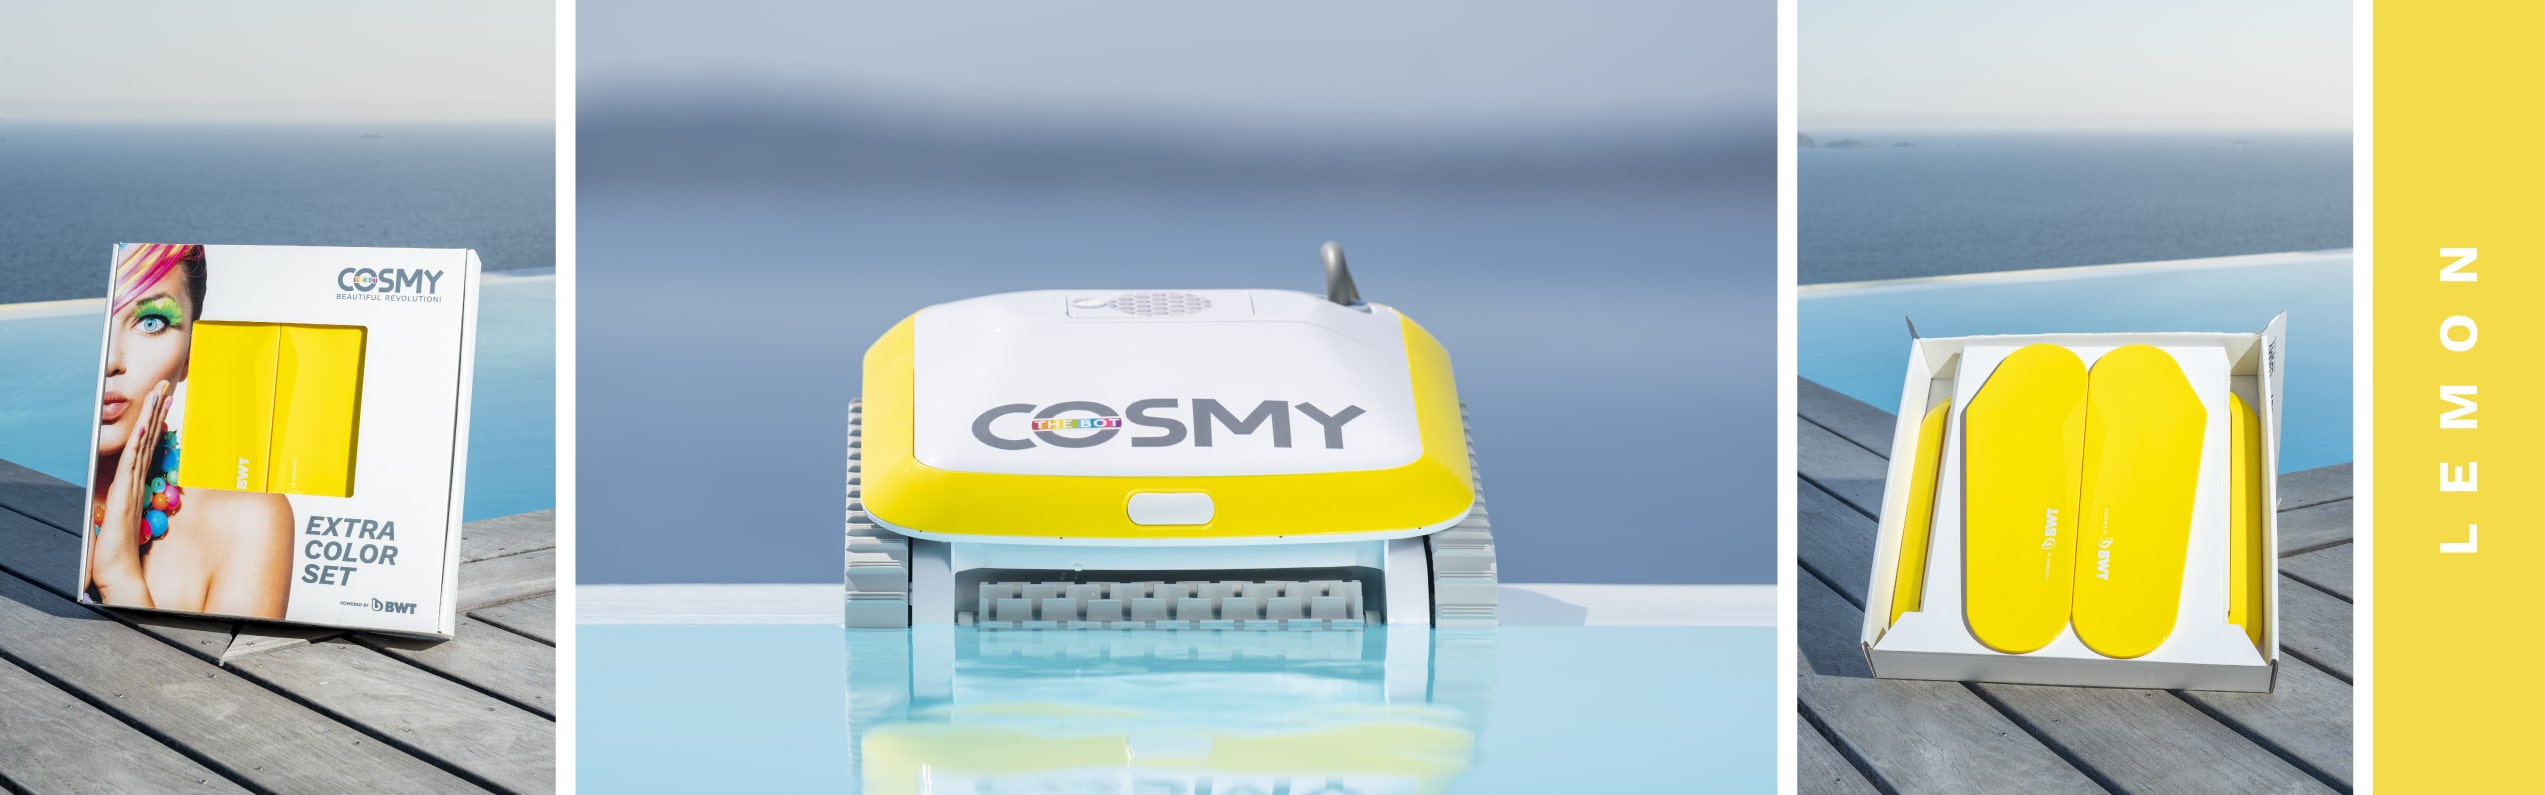 robot cosmy kit couleur lemon